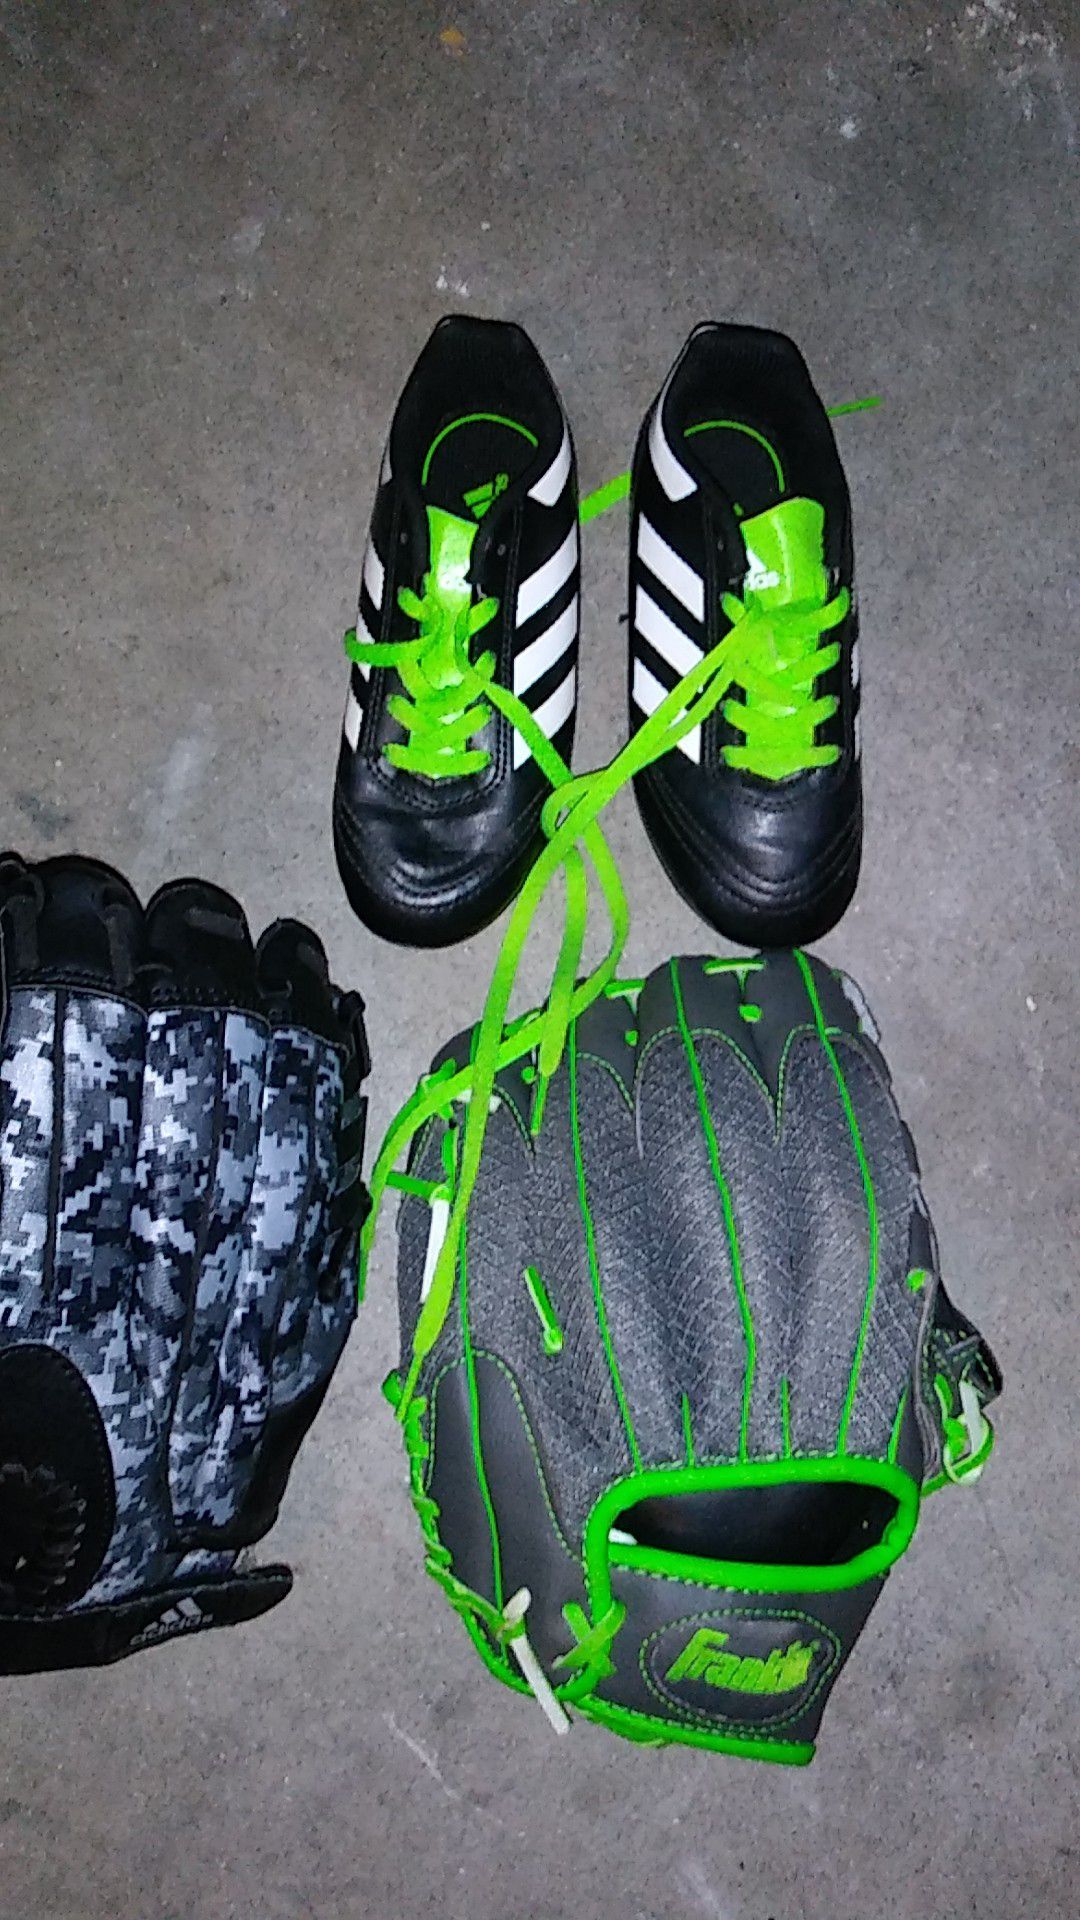 Kids adidas baseball glove, Franklin glove and size 12 k adiddas cleats.